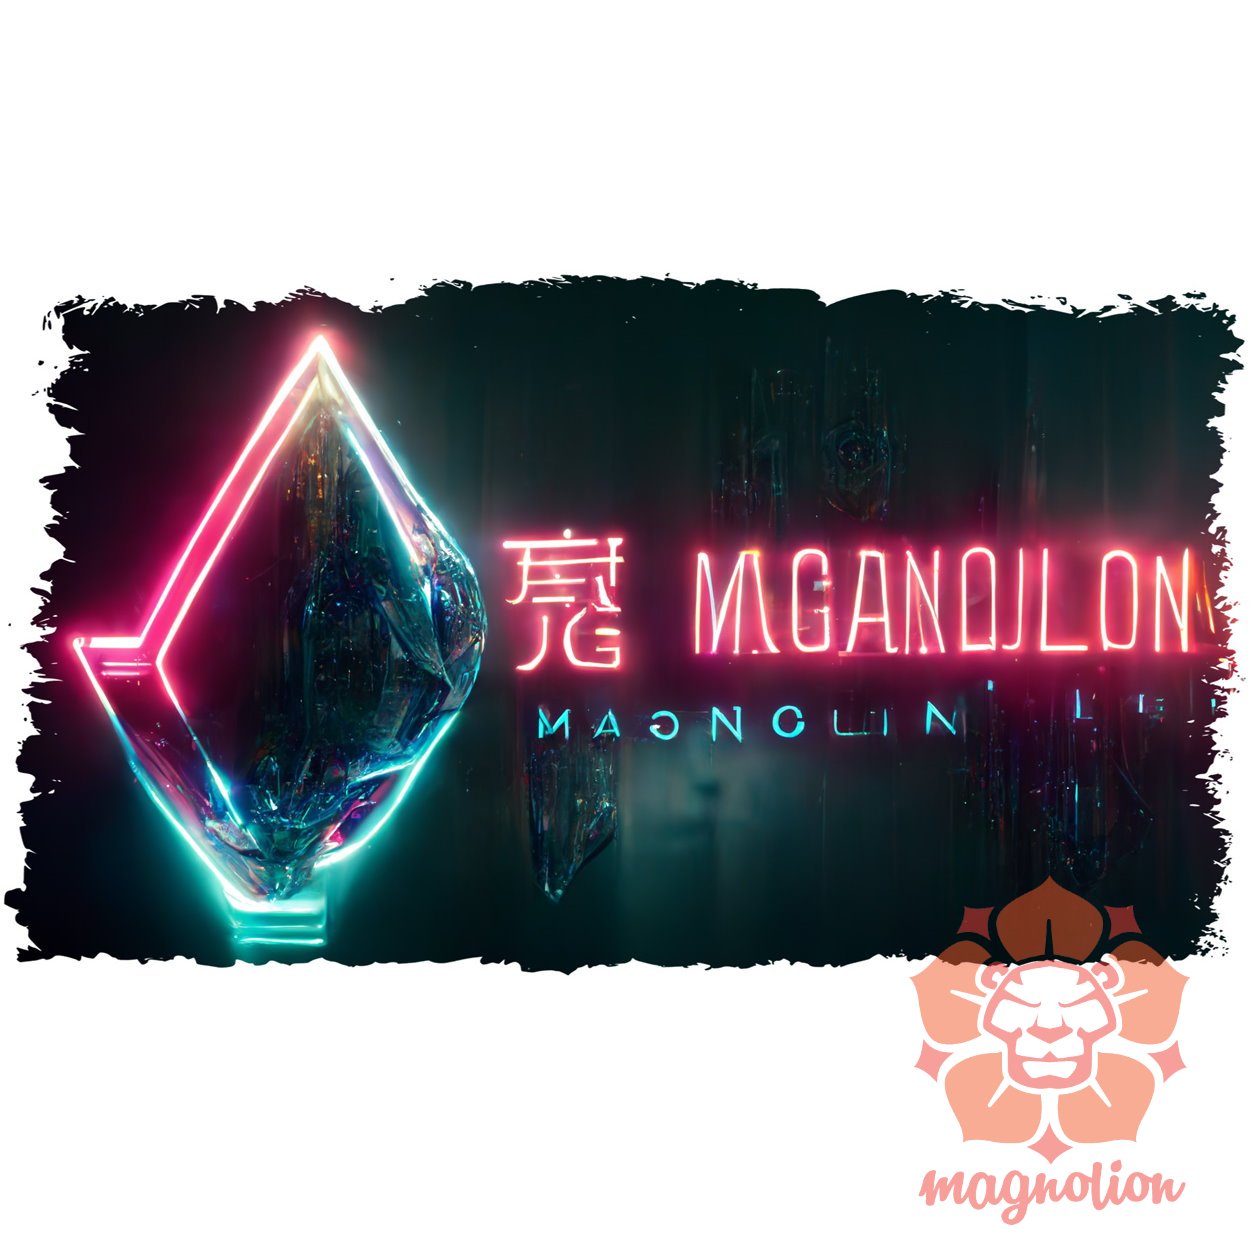 Cyber magnolion